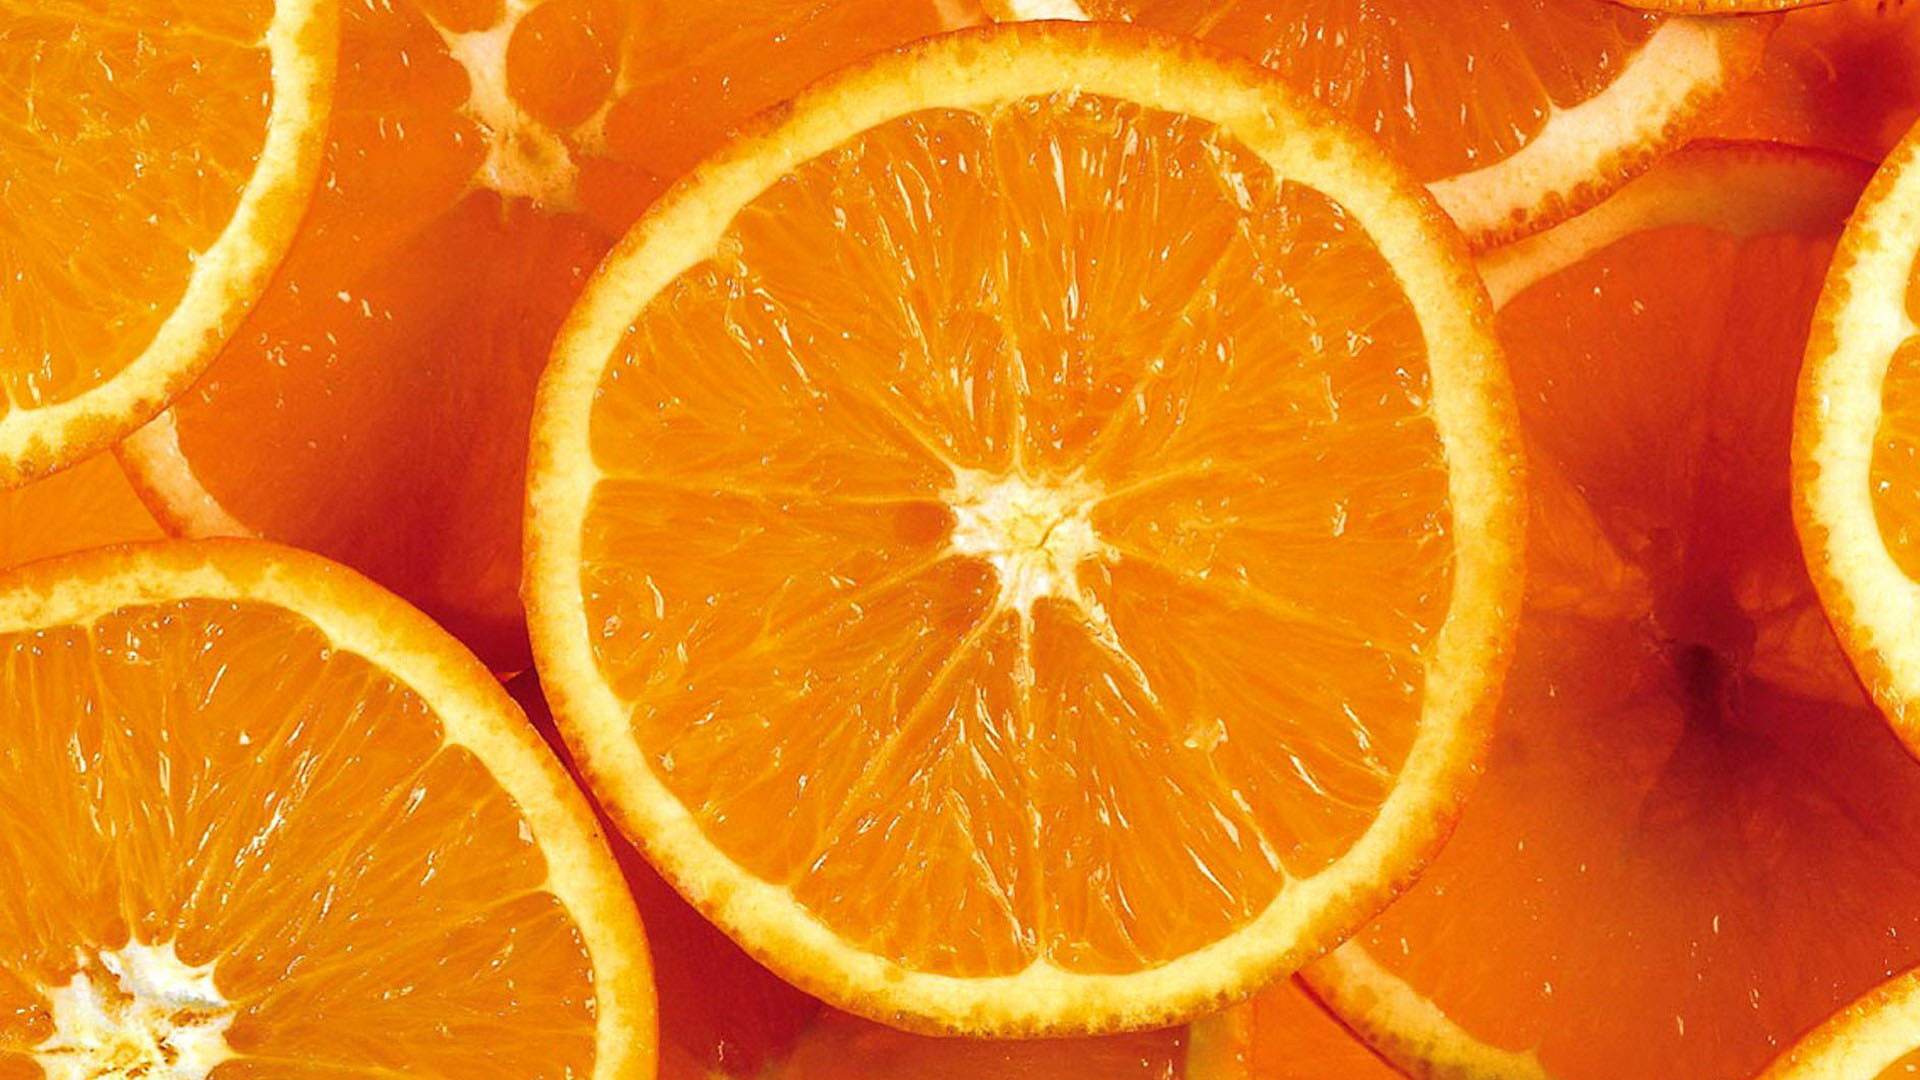 Oranges HD Wallpaper FullHDwpp Full